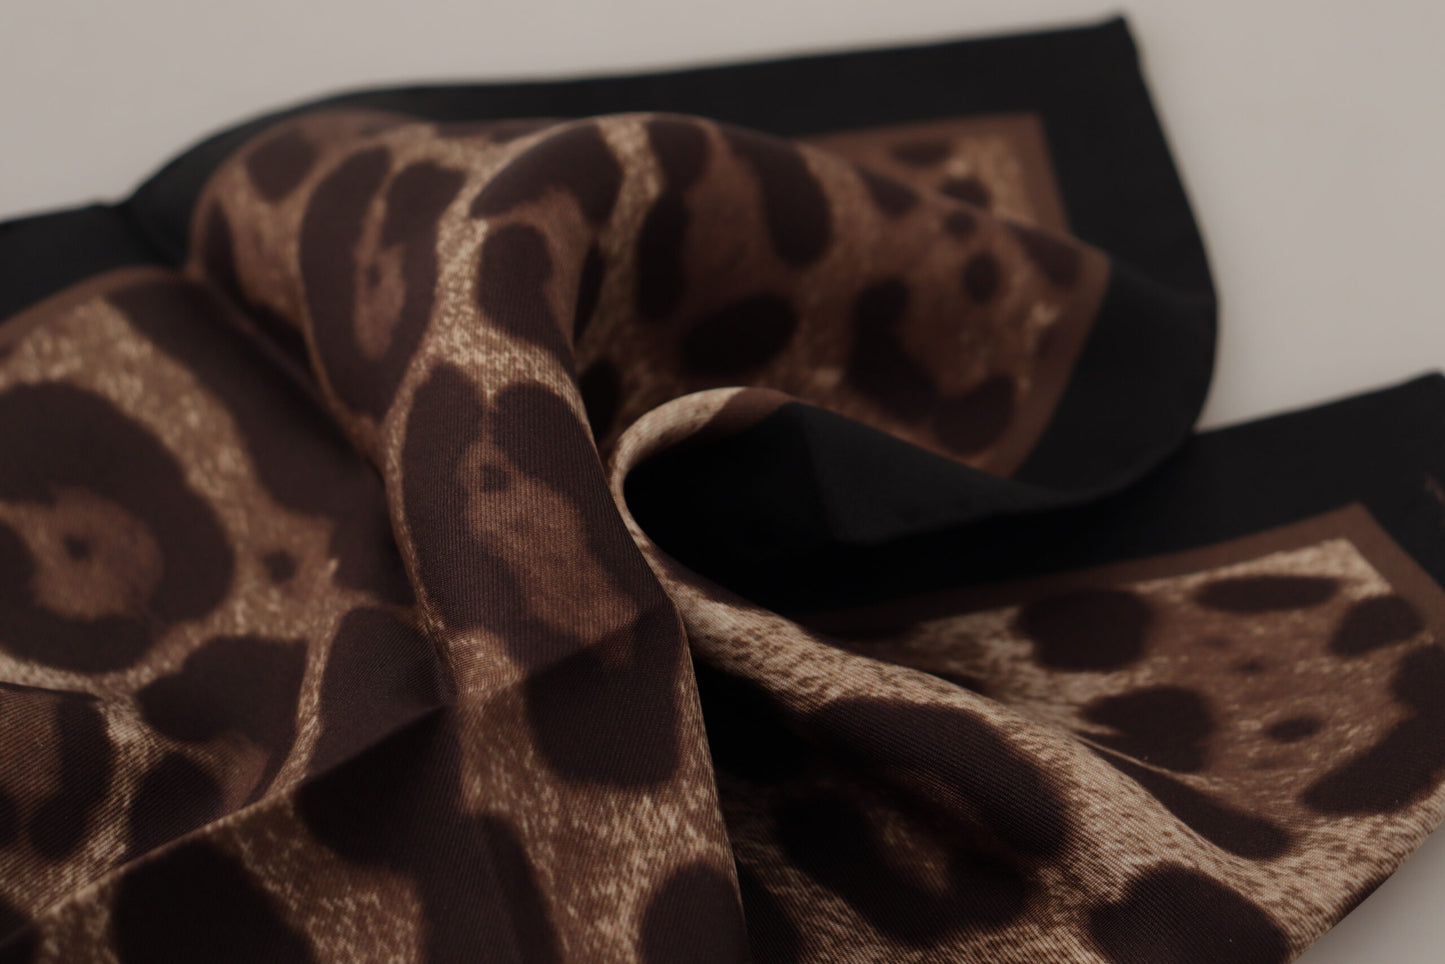 Dolce & Gabbana Silk Foulard with Leopard Print